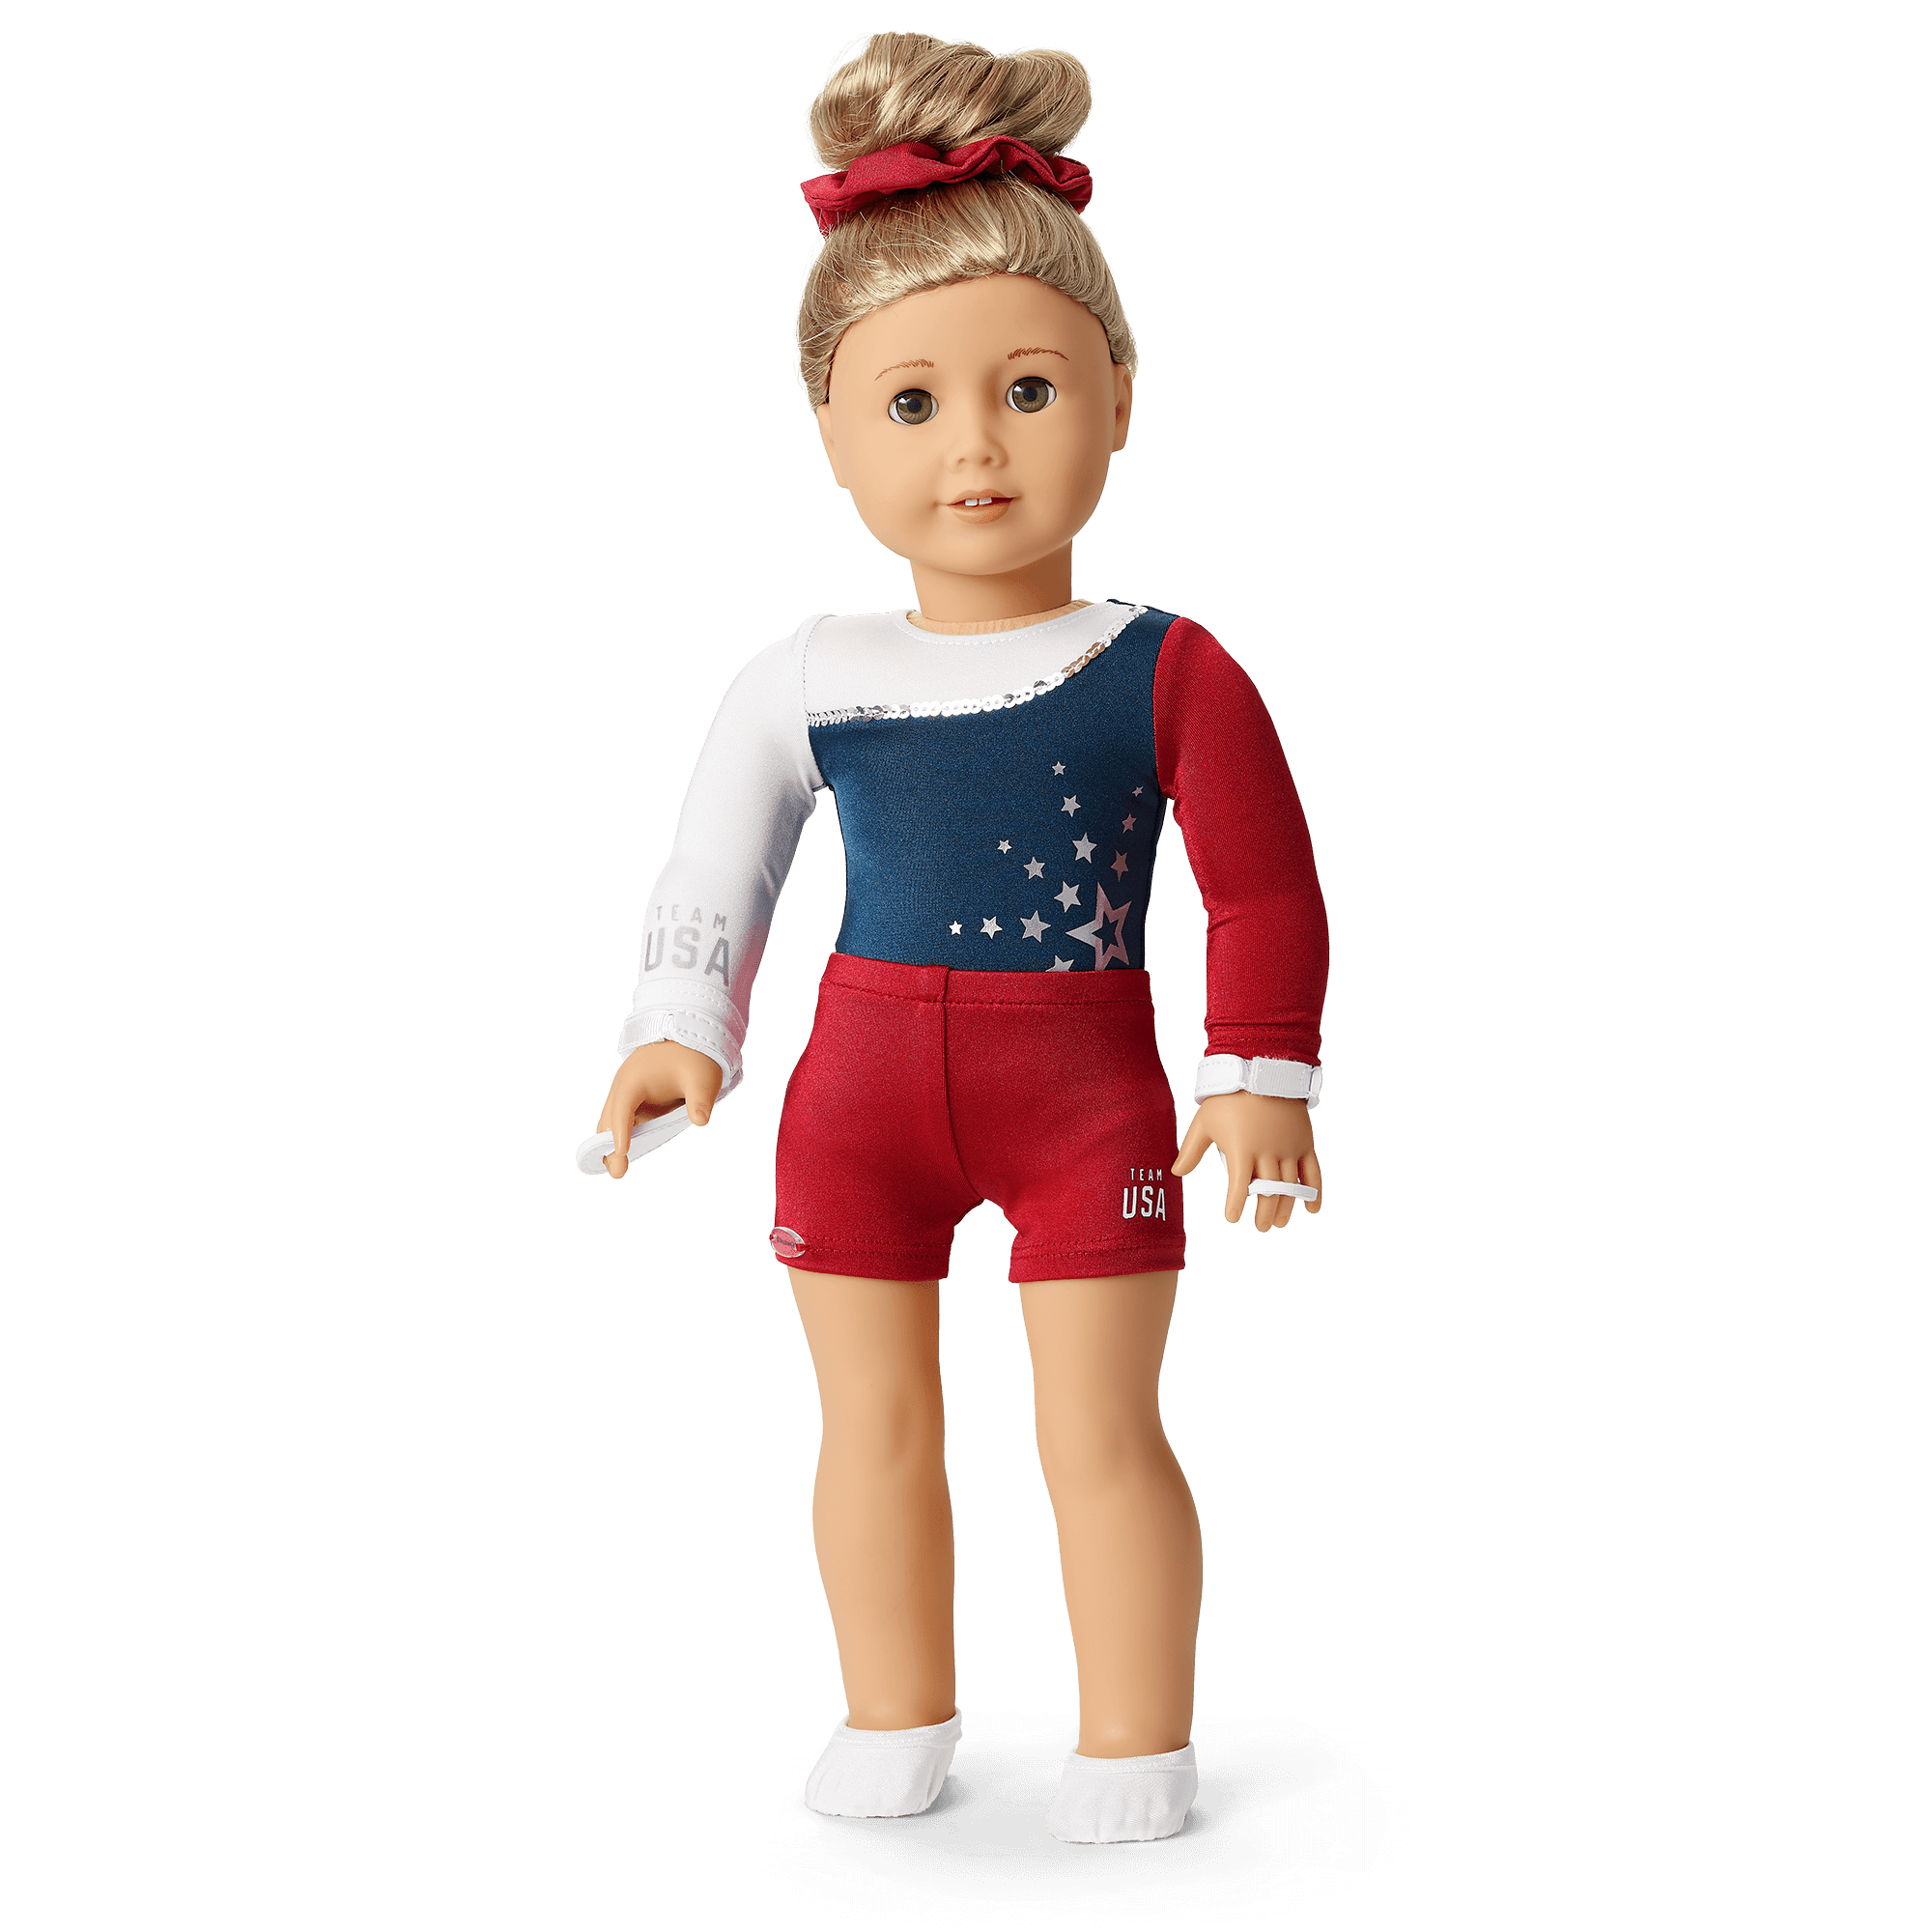 Gymnastics Leotard Set Includes Doll Leo made to fit 18" American Girl Dolls 